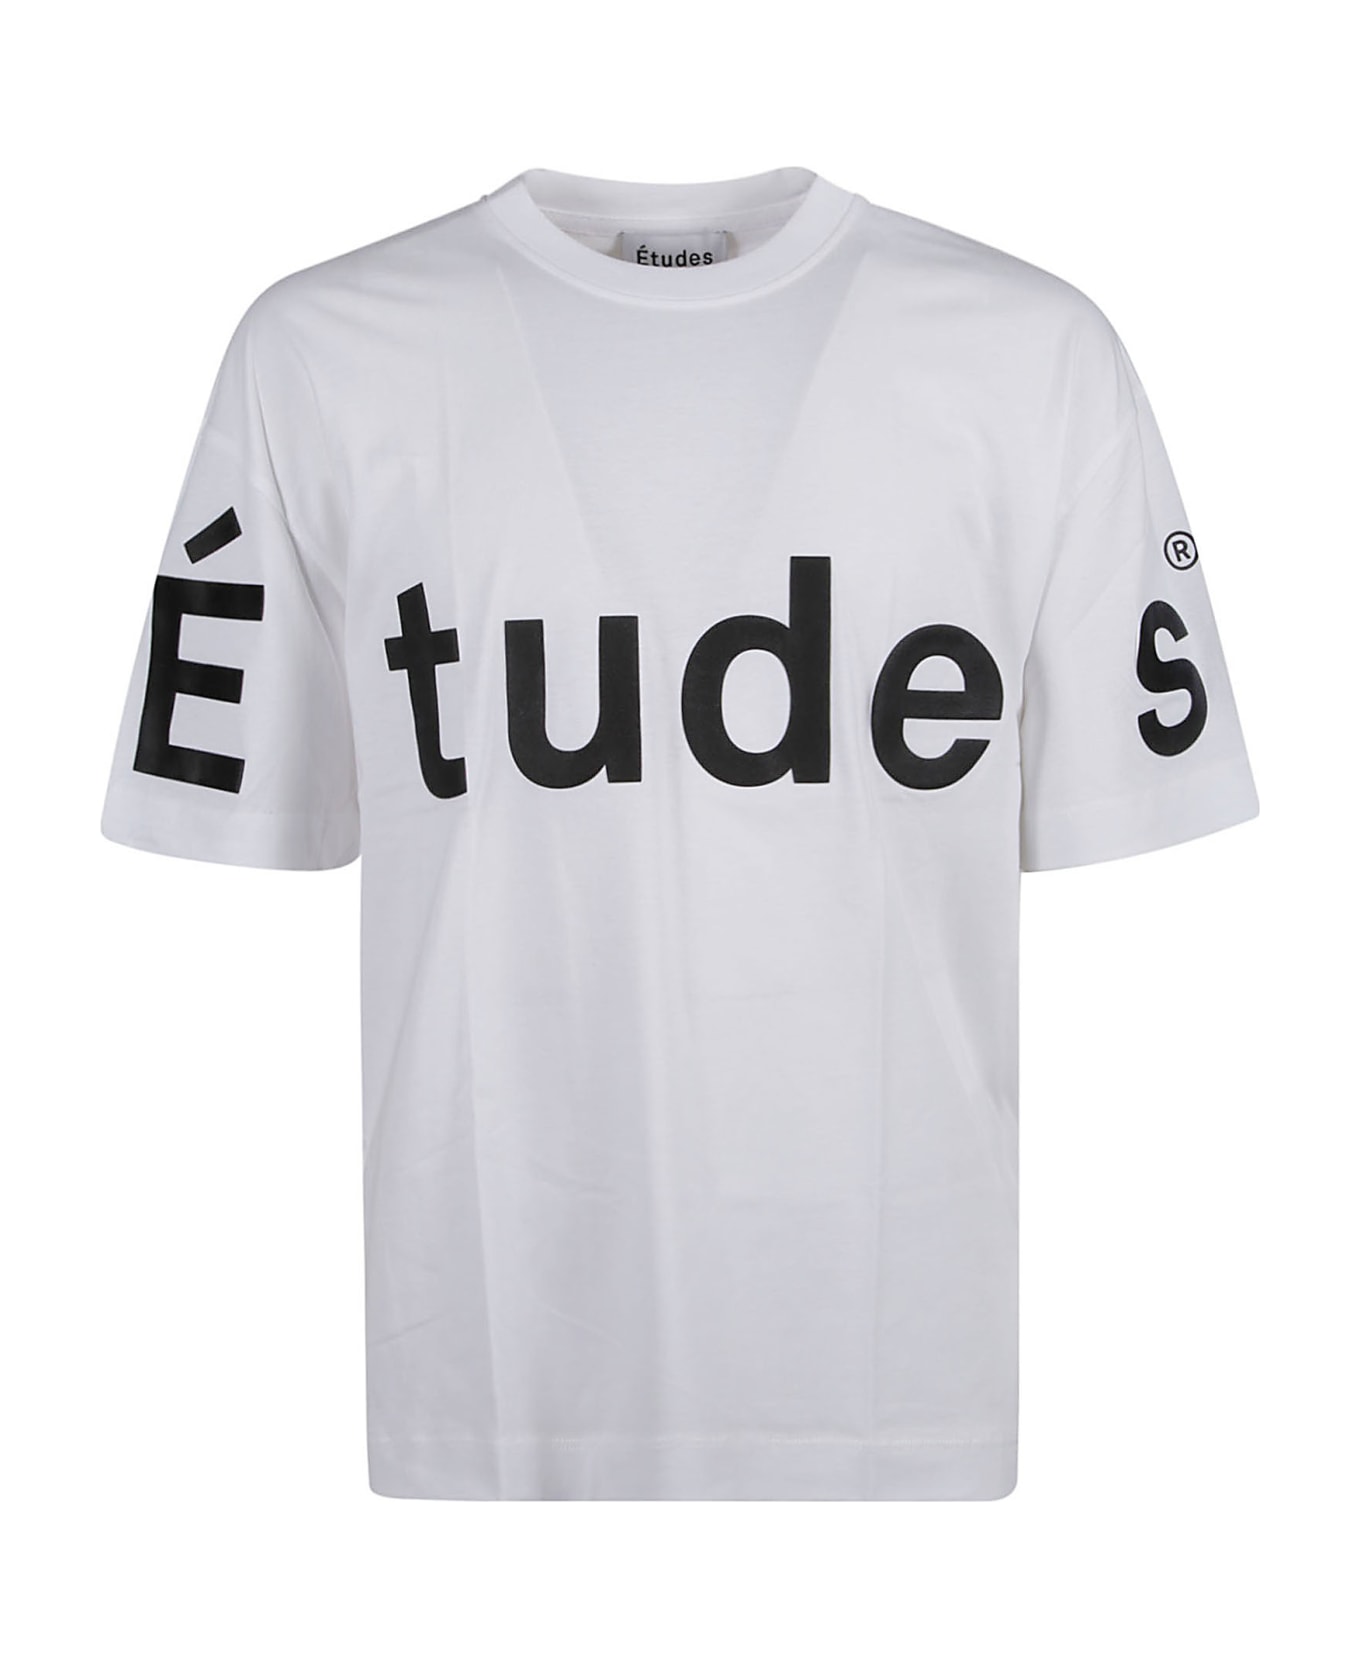 Études Spirit Etudes T-shirt - White シャツ